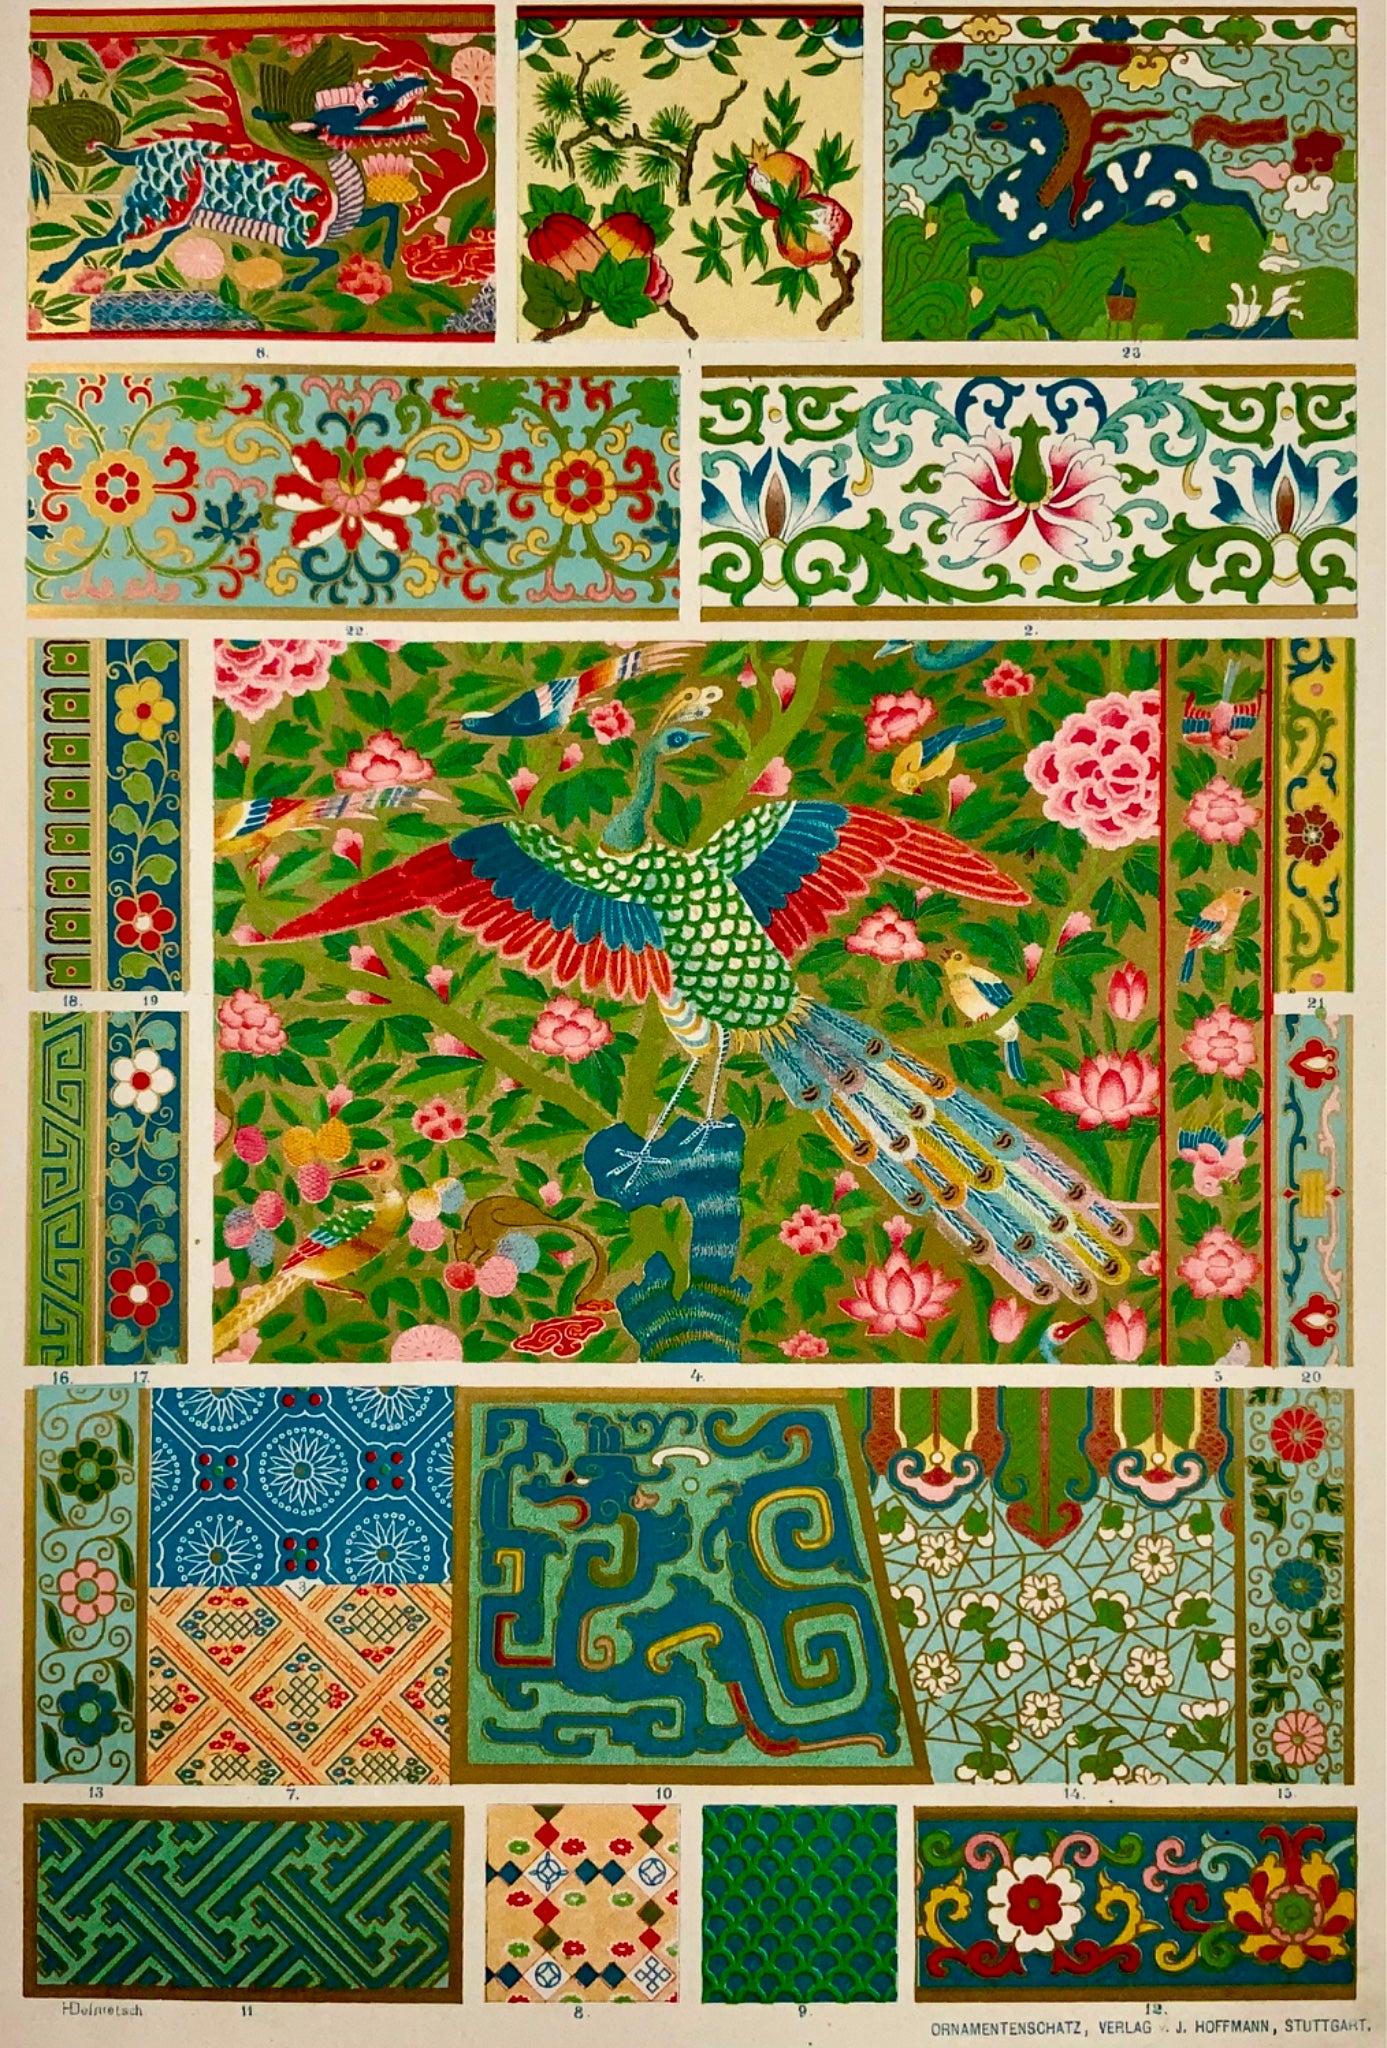 1887 Art et textiles chinois, chromolithographie in-folio rehaussée d'or